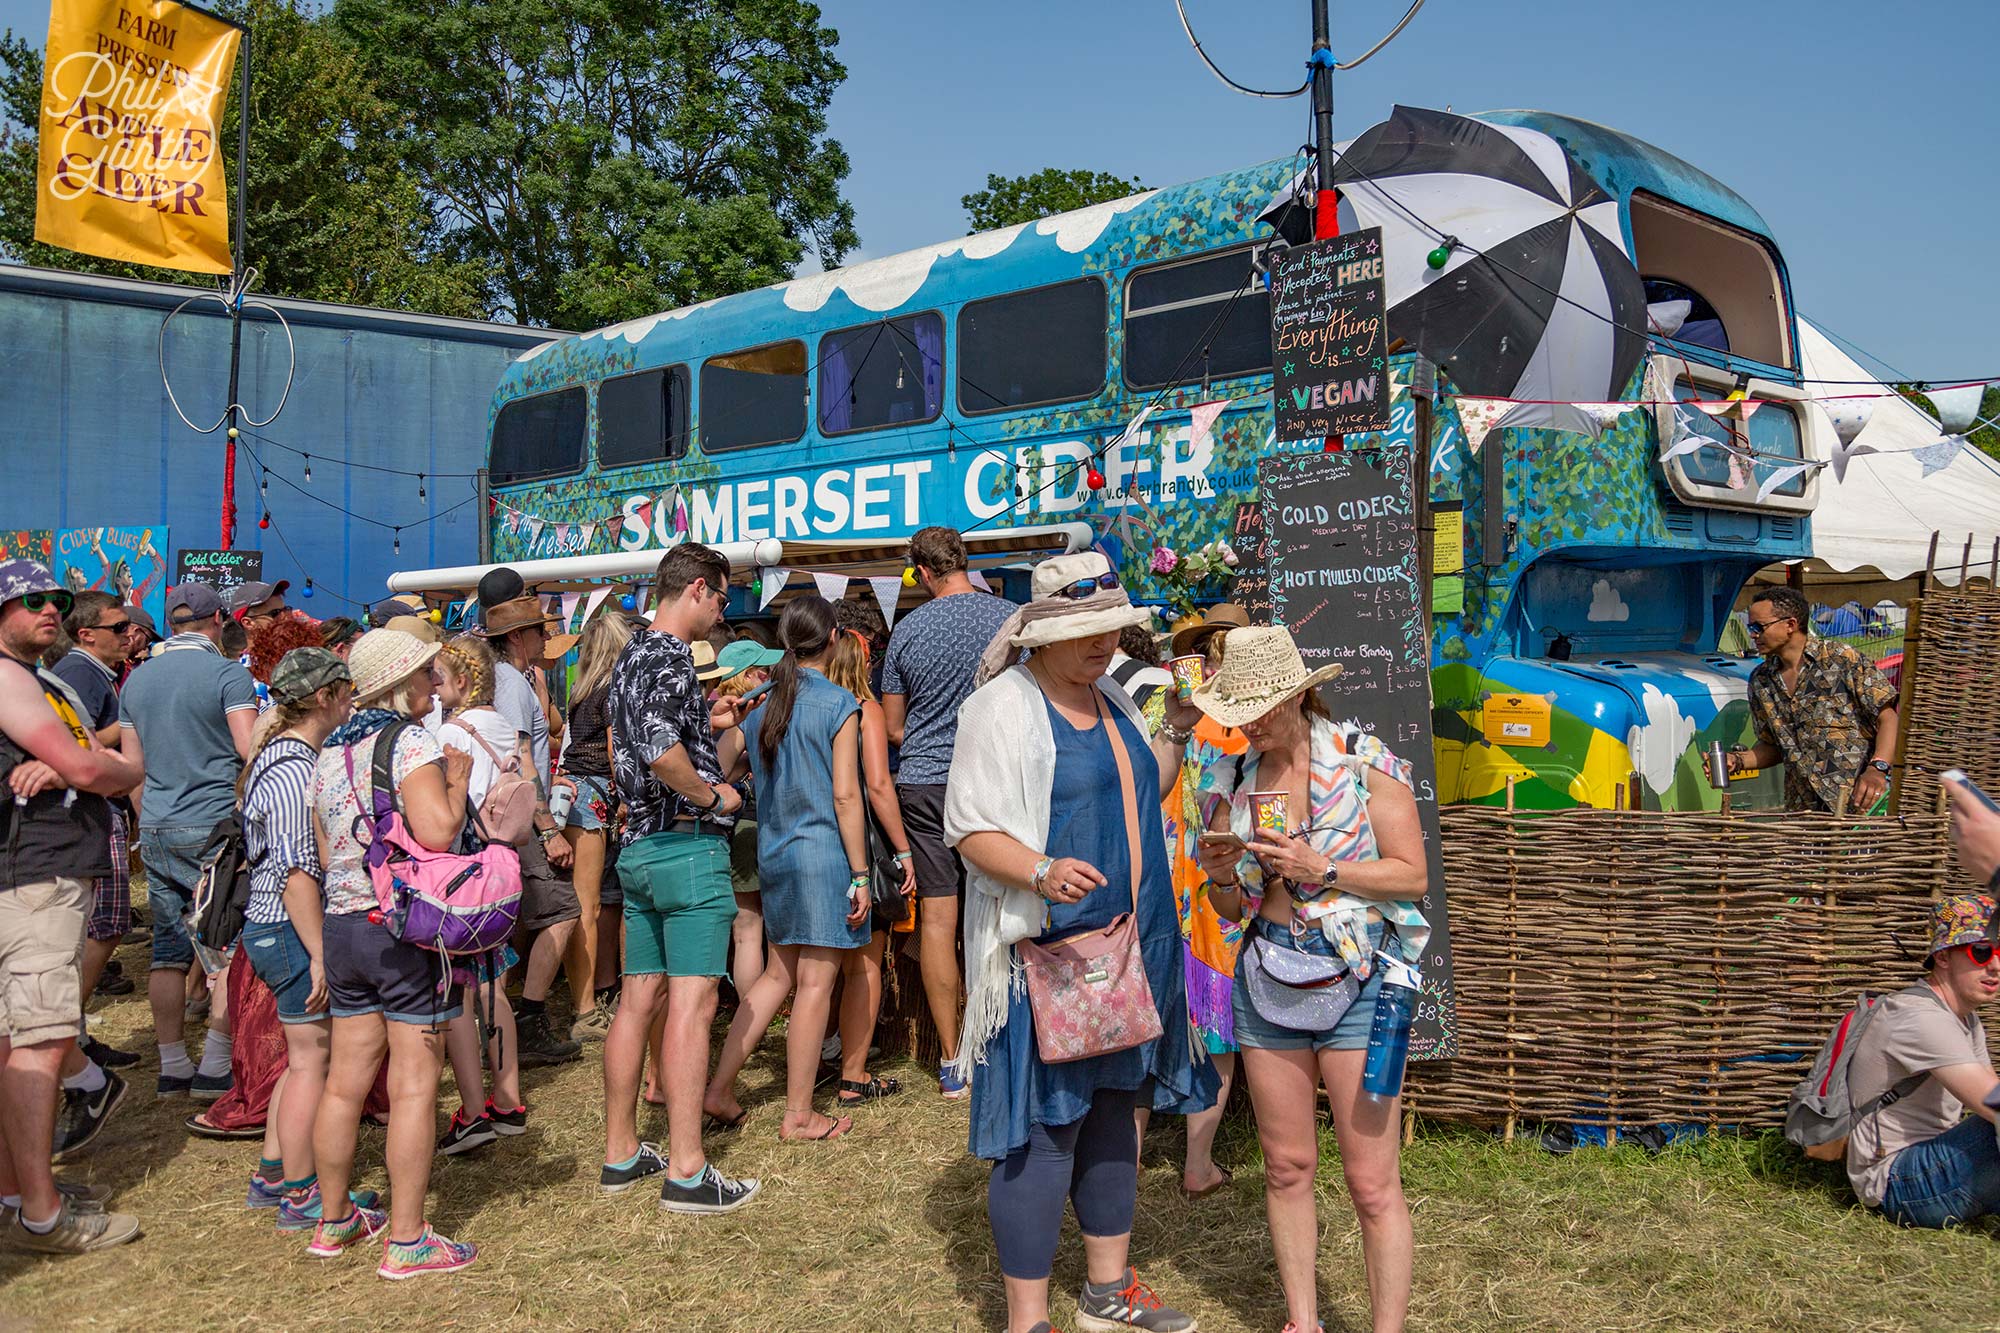 The Somerset Cider bus is always popular